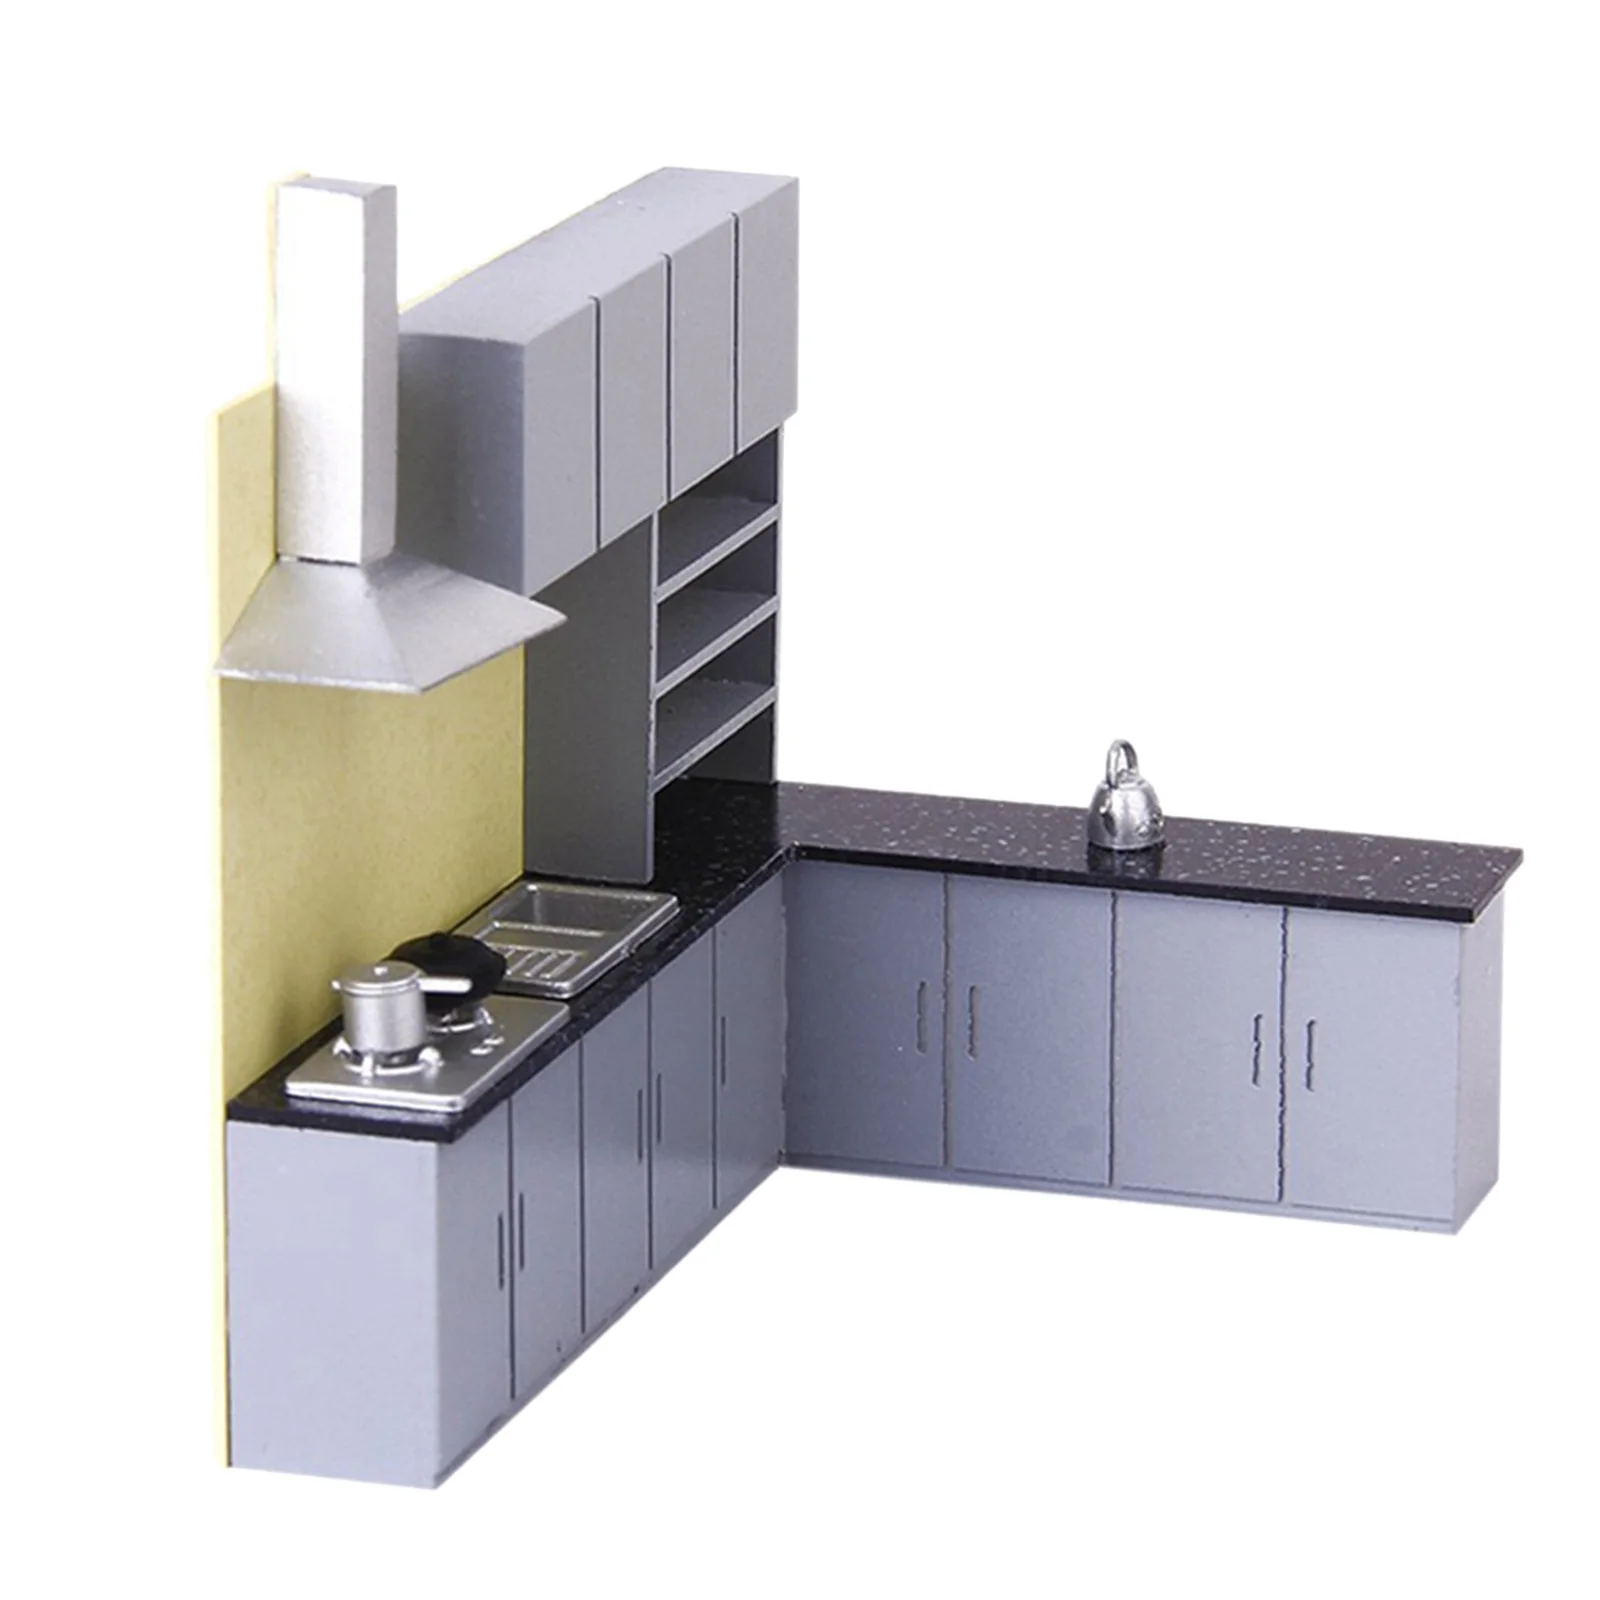 Dollhouse Kitchen Dining Room Furniture Decor - 1/25 Scale Miniature Kitchen Cabinet Cupboard Model Set